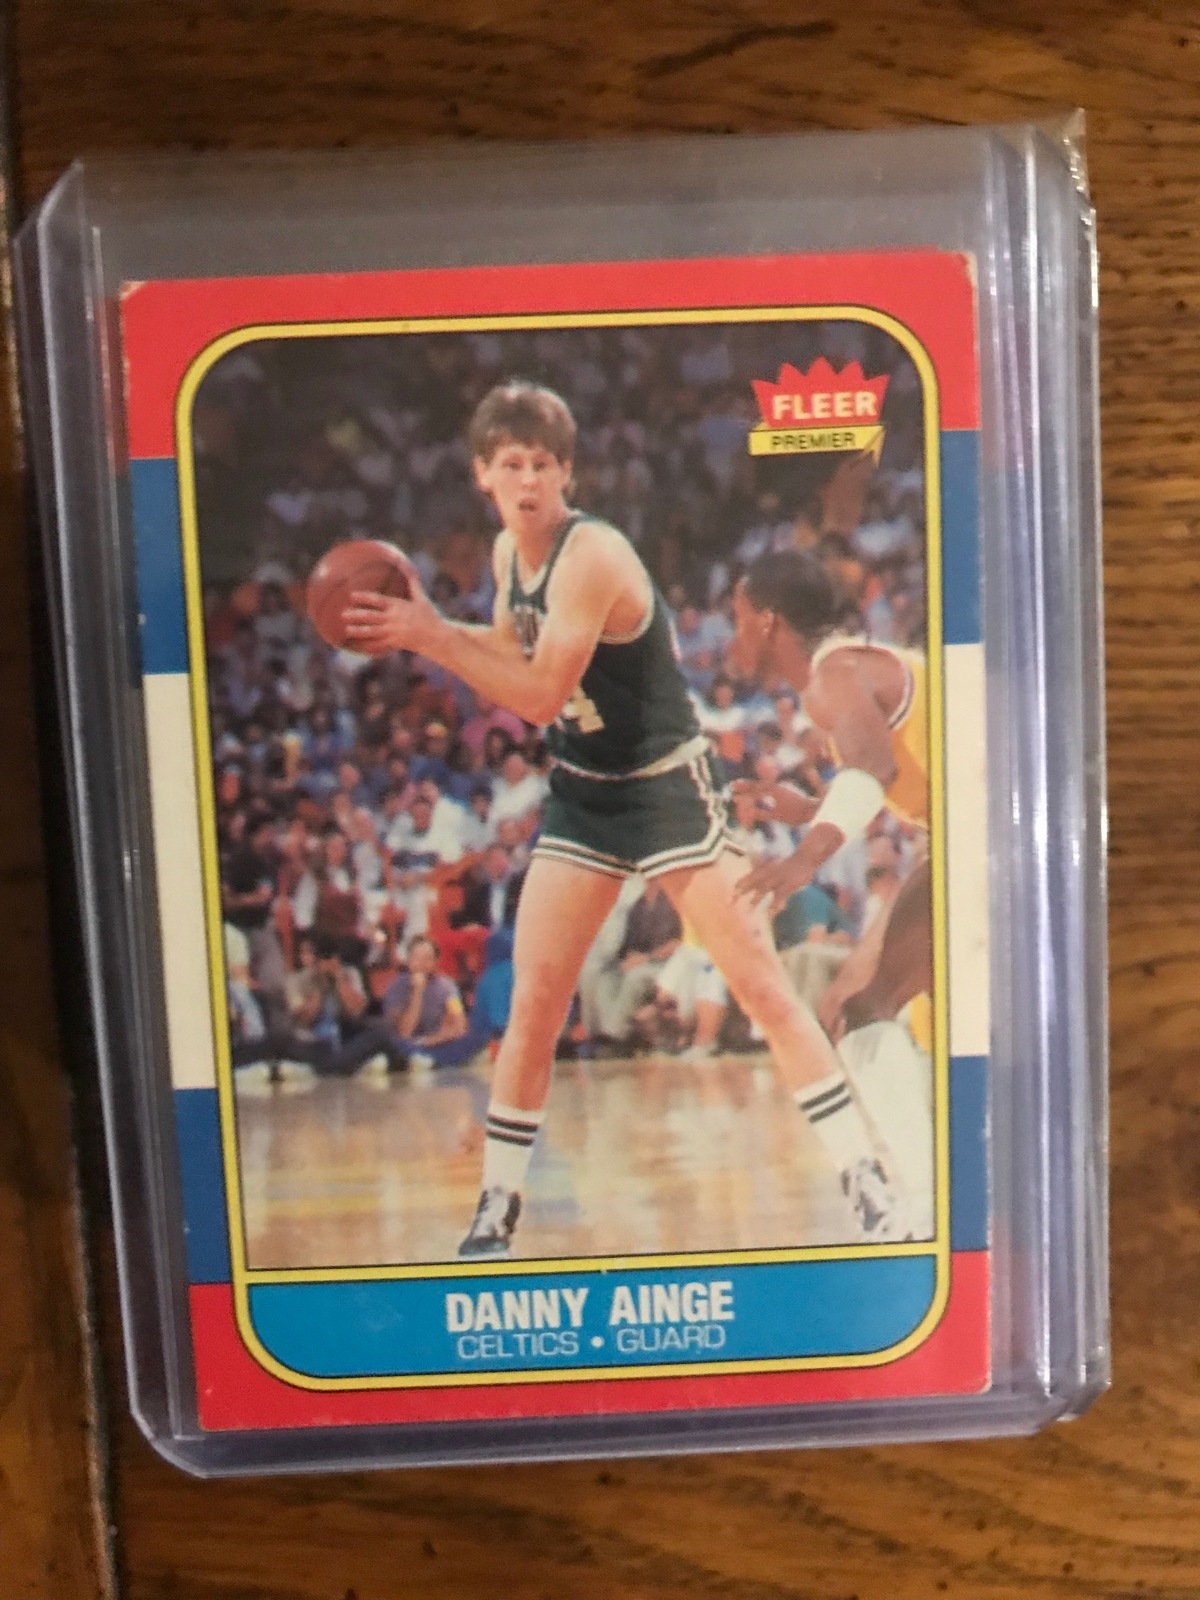 Primary image for Danny Ainge 1986 Fleer Basketball Card   (01233)